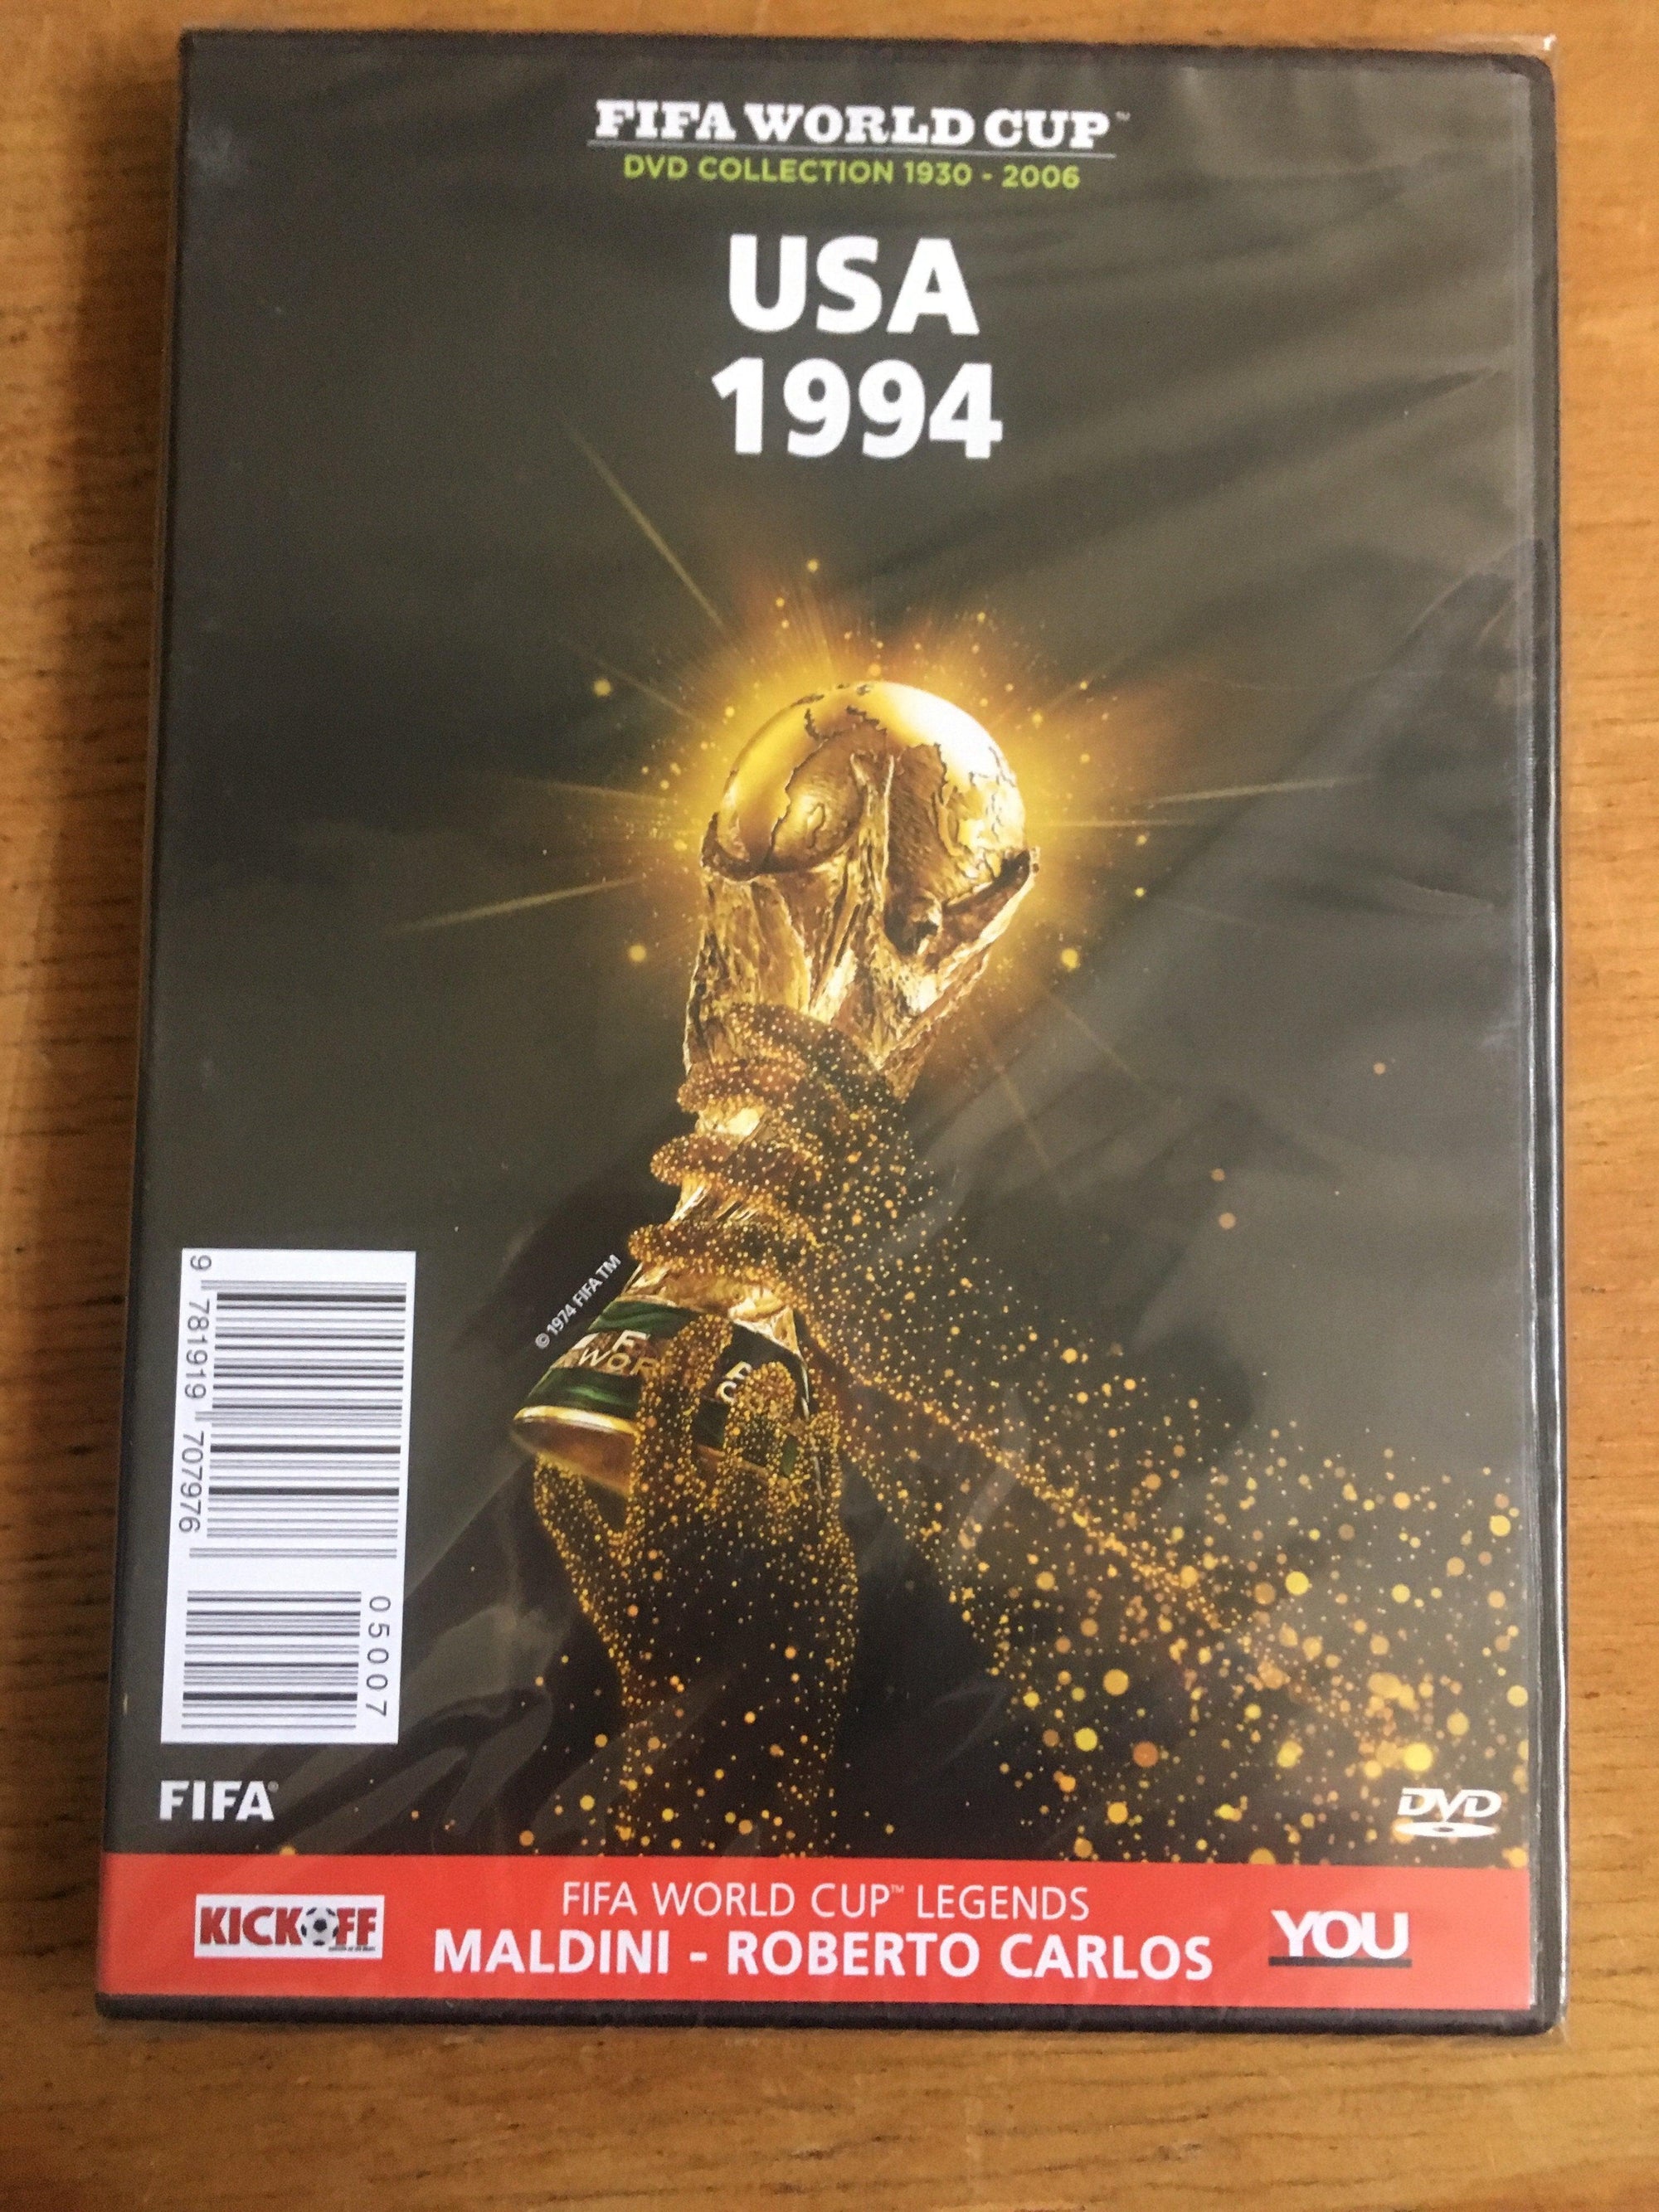 Fifa World Cup USA 1994 (DVD) - 2ndhandwarehouse.com